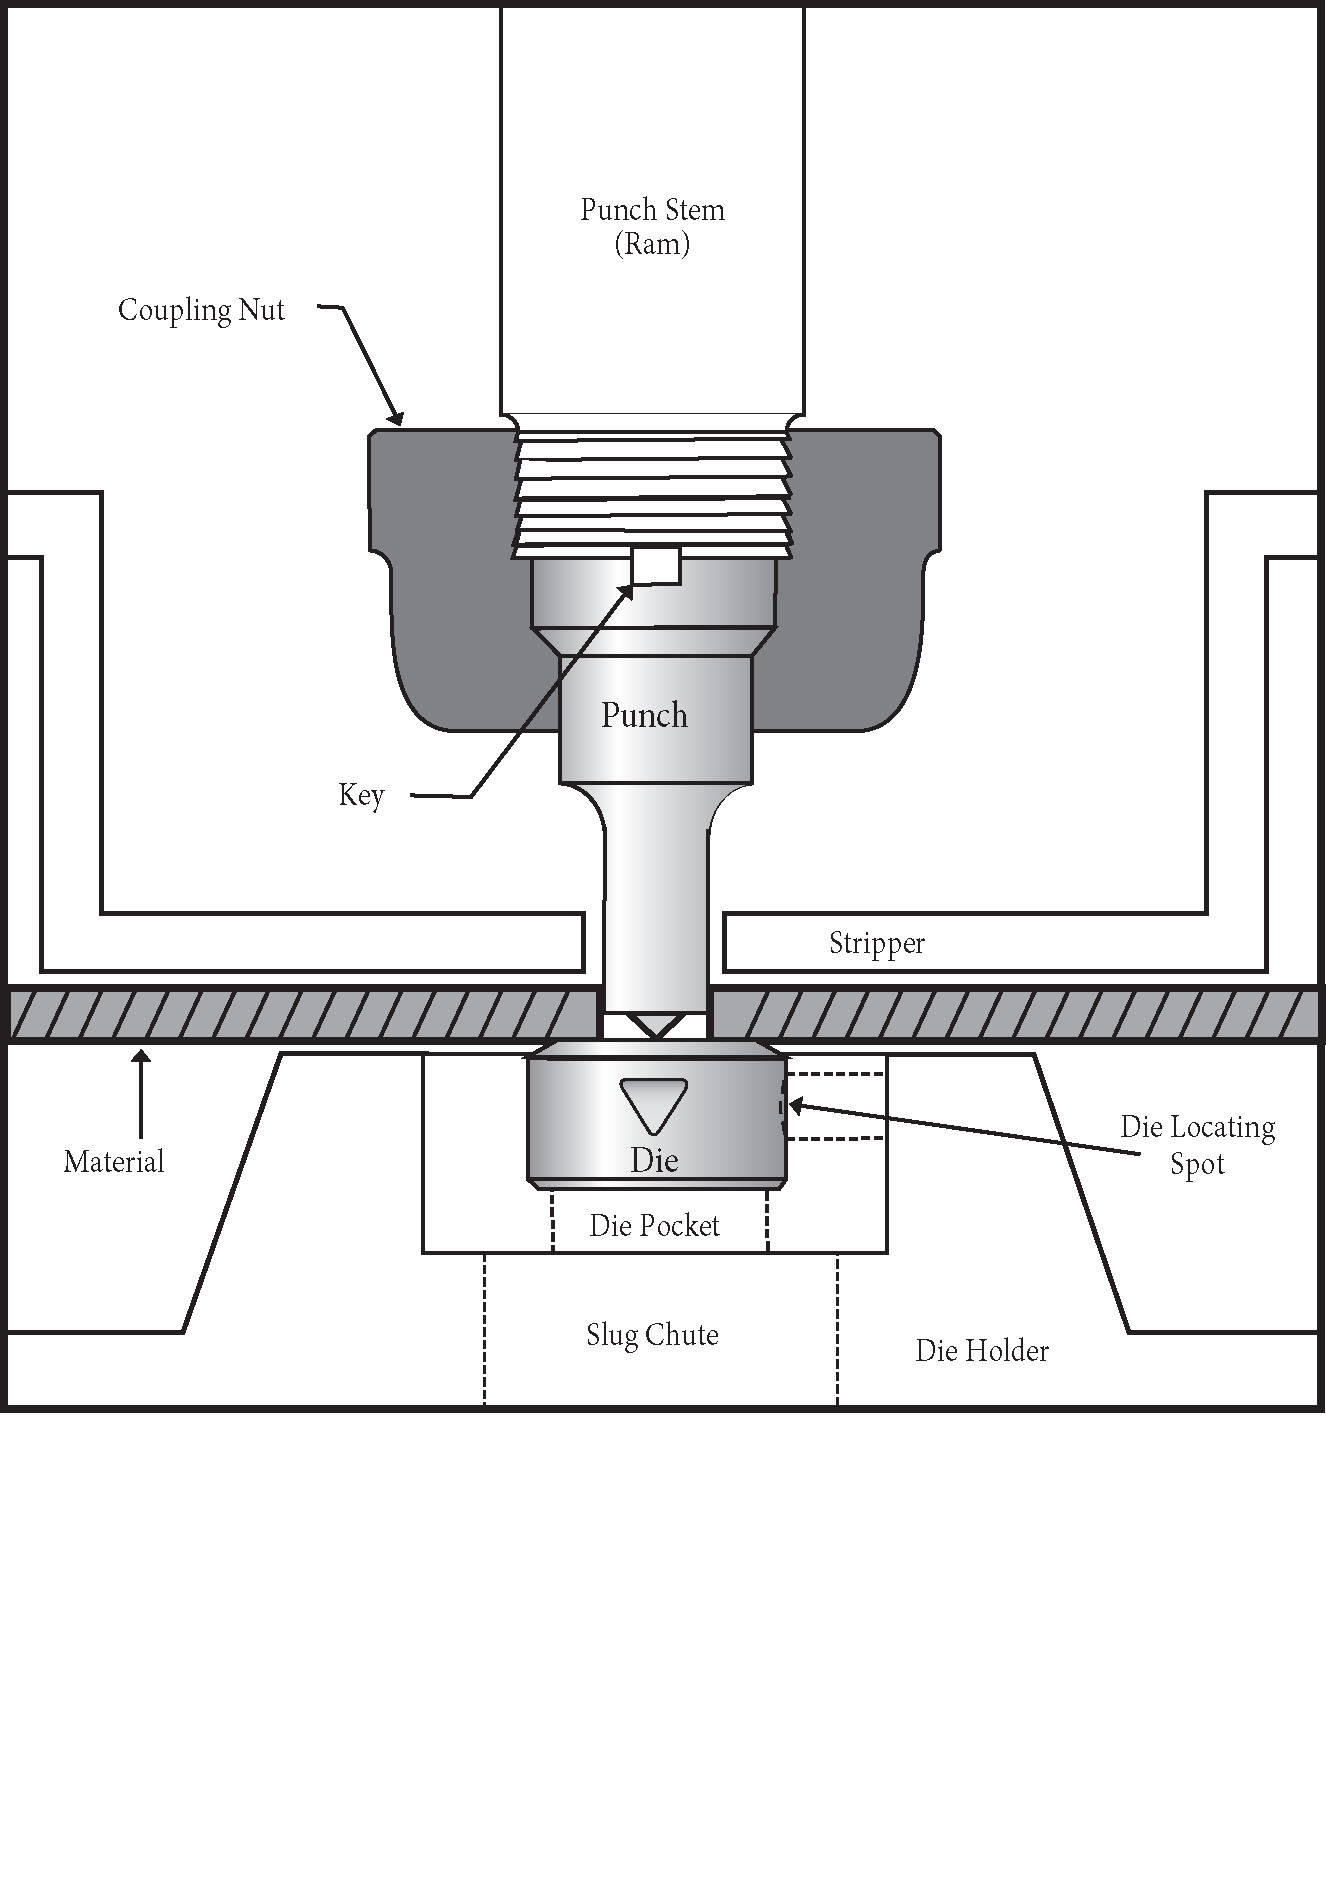 Ironworker Punch Setup Diagram